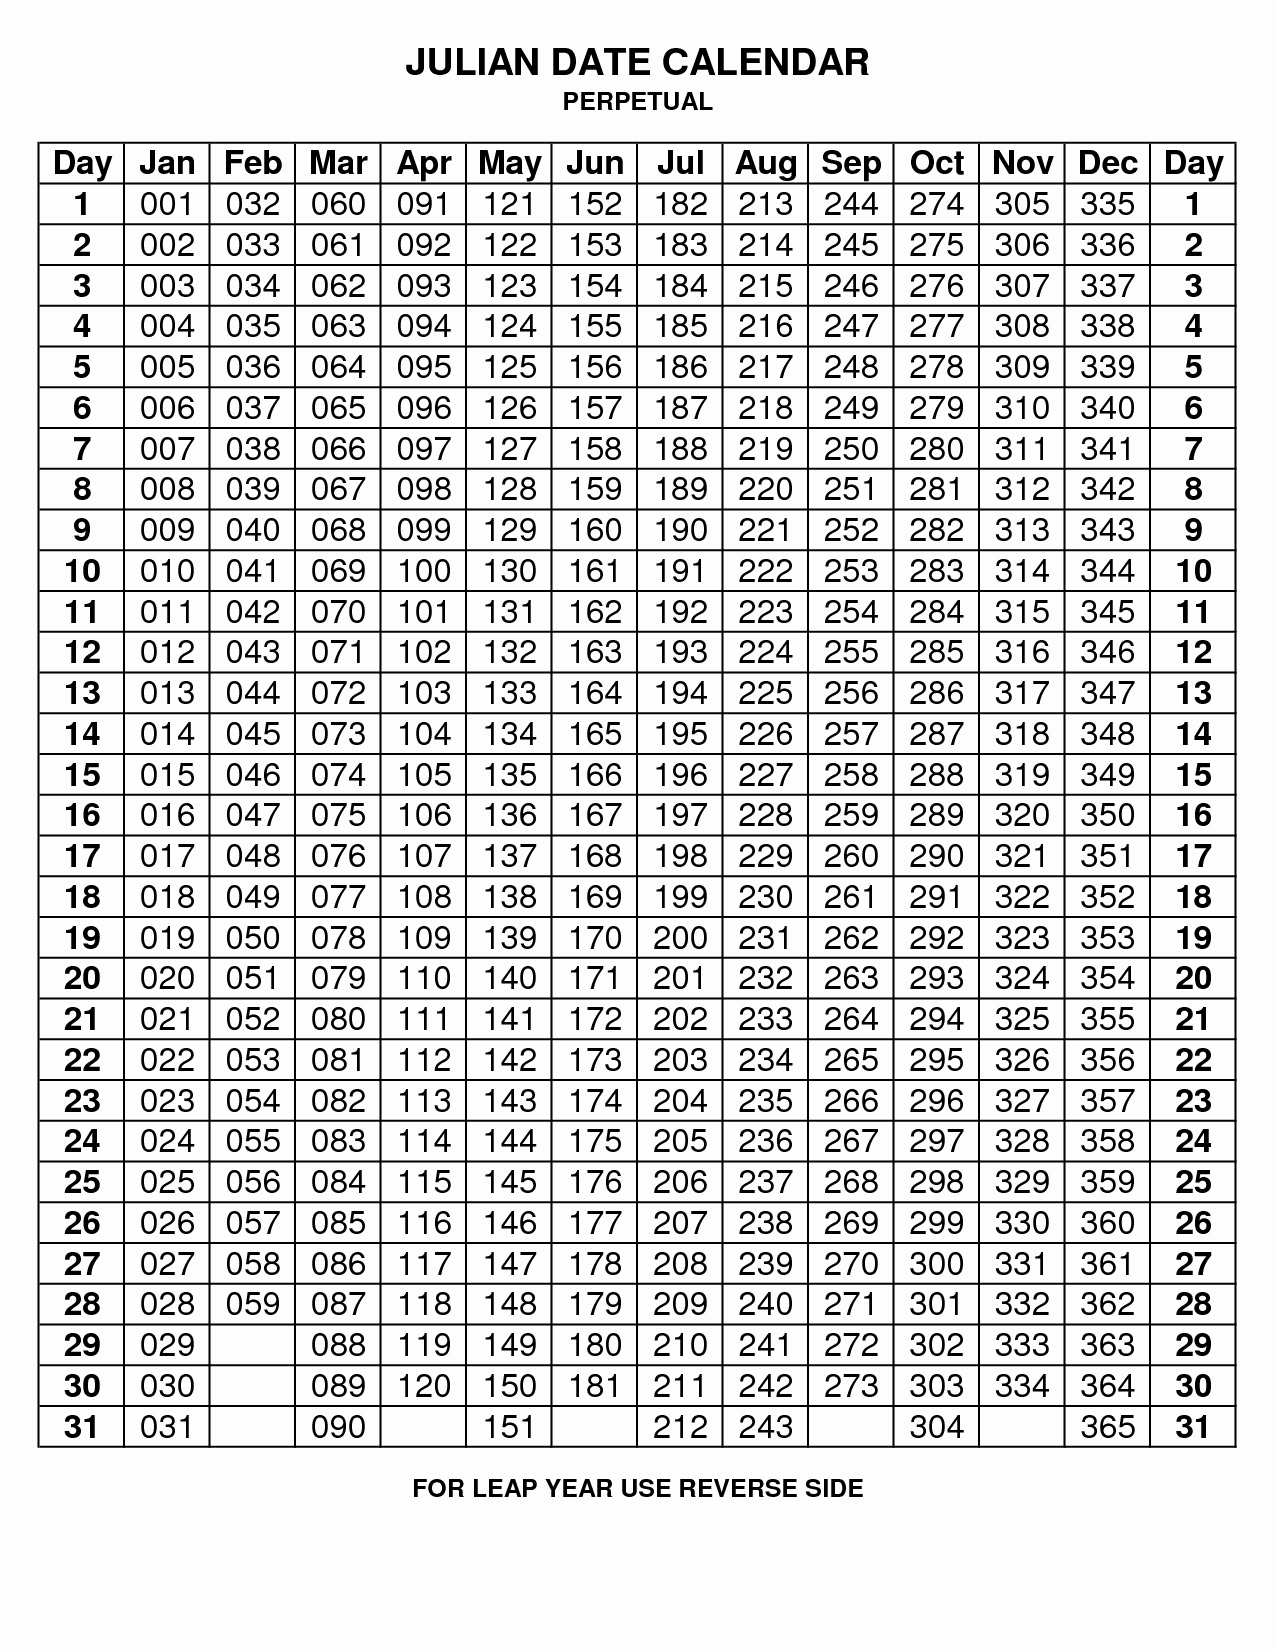 Depo Provera Perpetual Calendar To Print - Calendar  Depo Provera Perpetual Calendar 2021